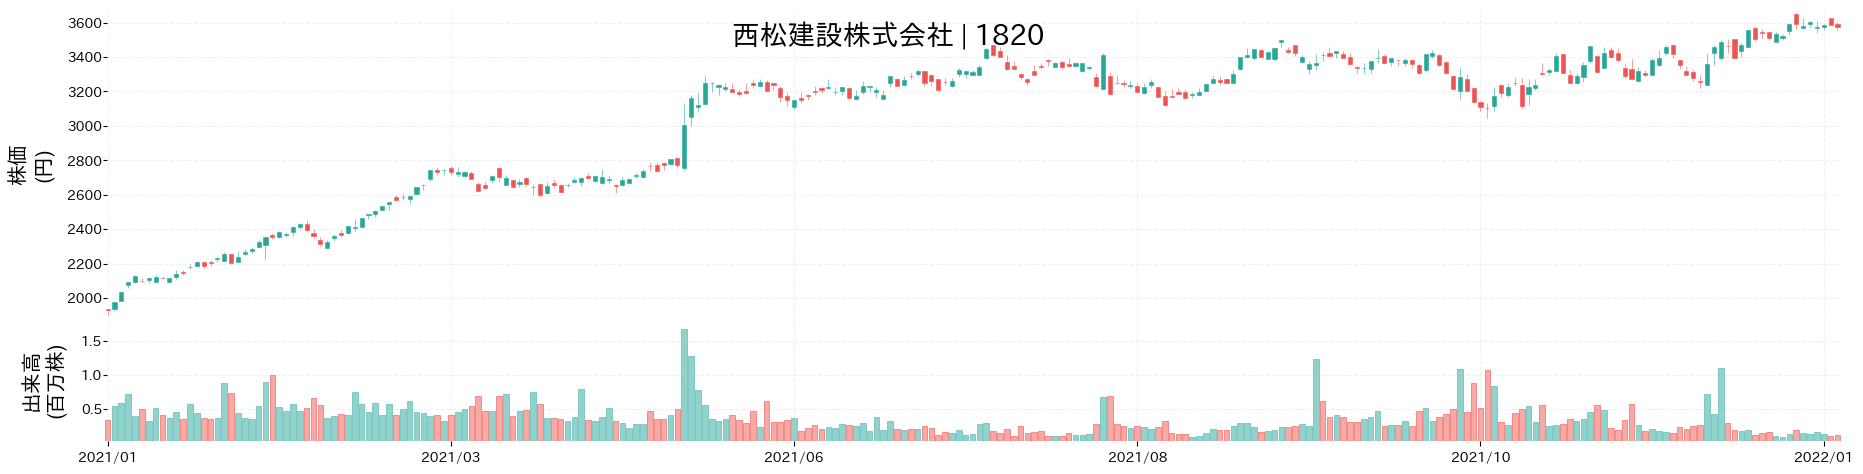 西松建設の株価推移(2021)